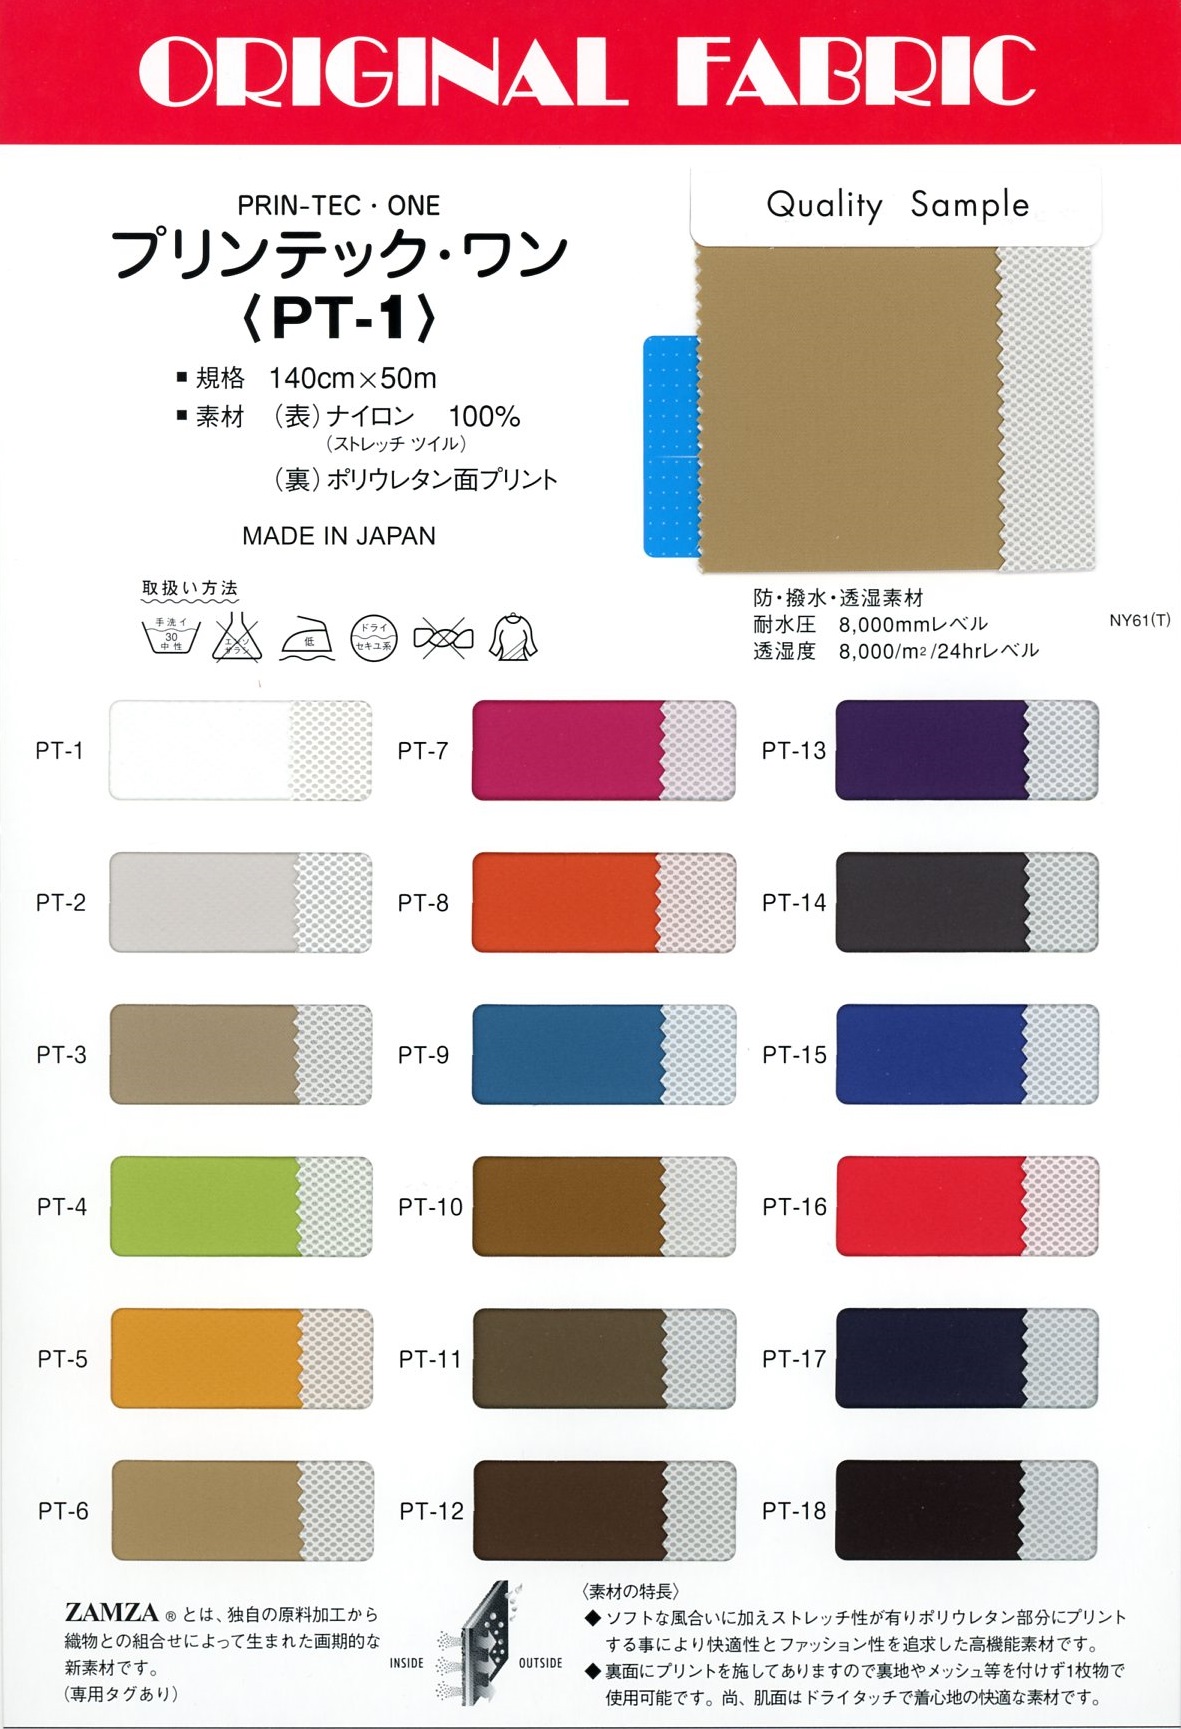 PT1 Printec One[Textile / Fabric] Masuda